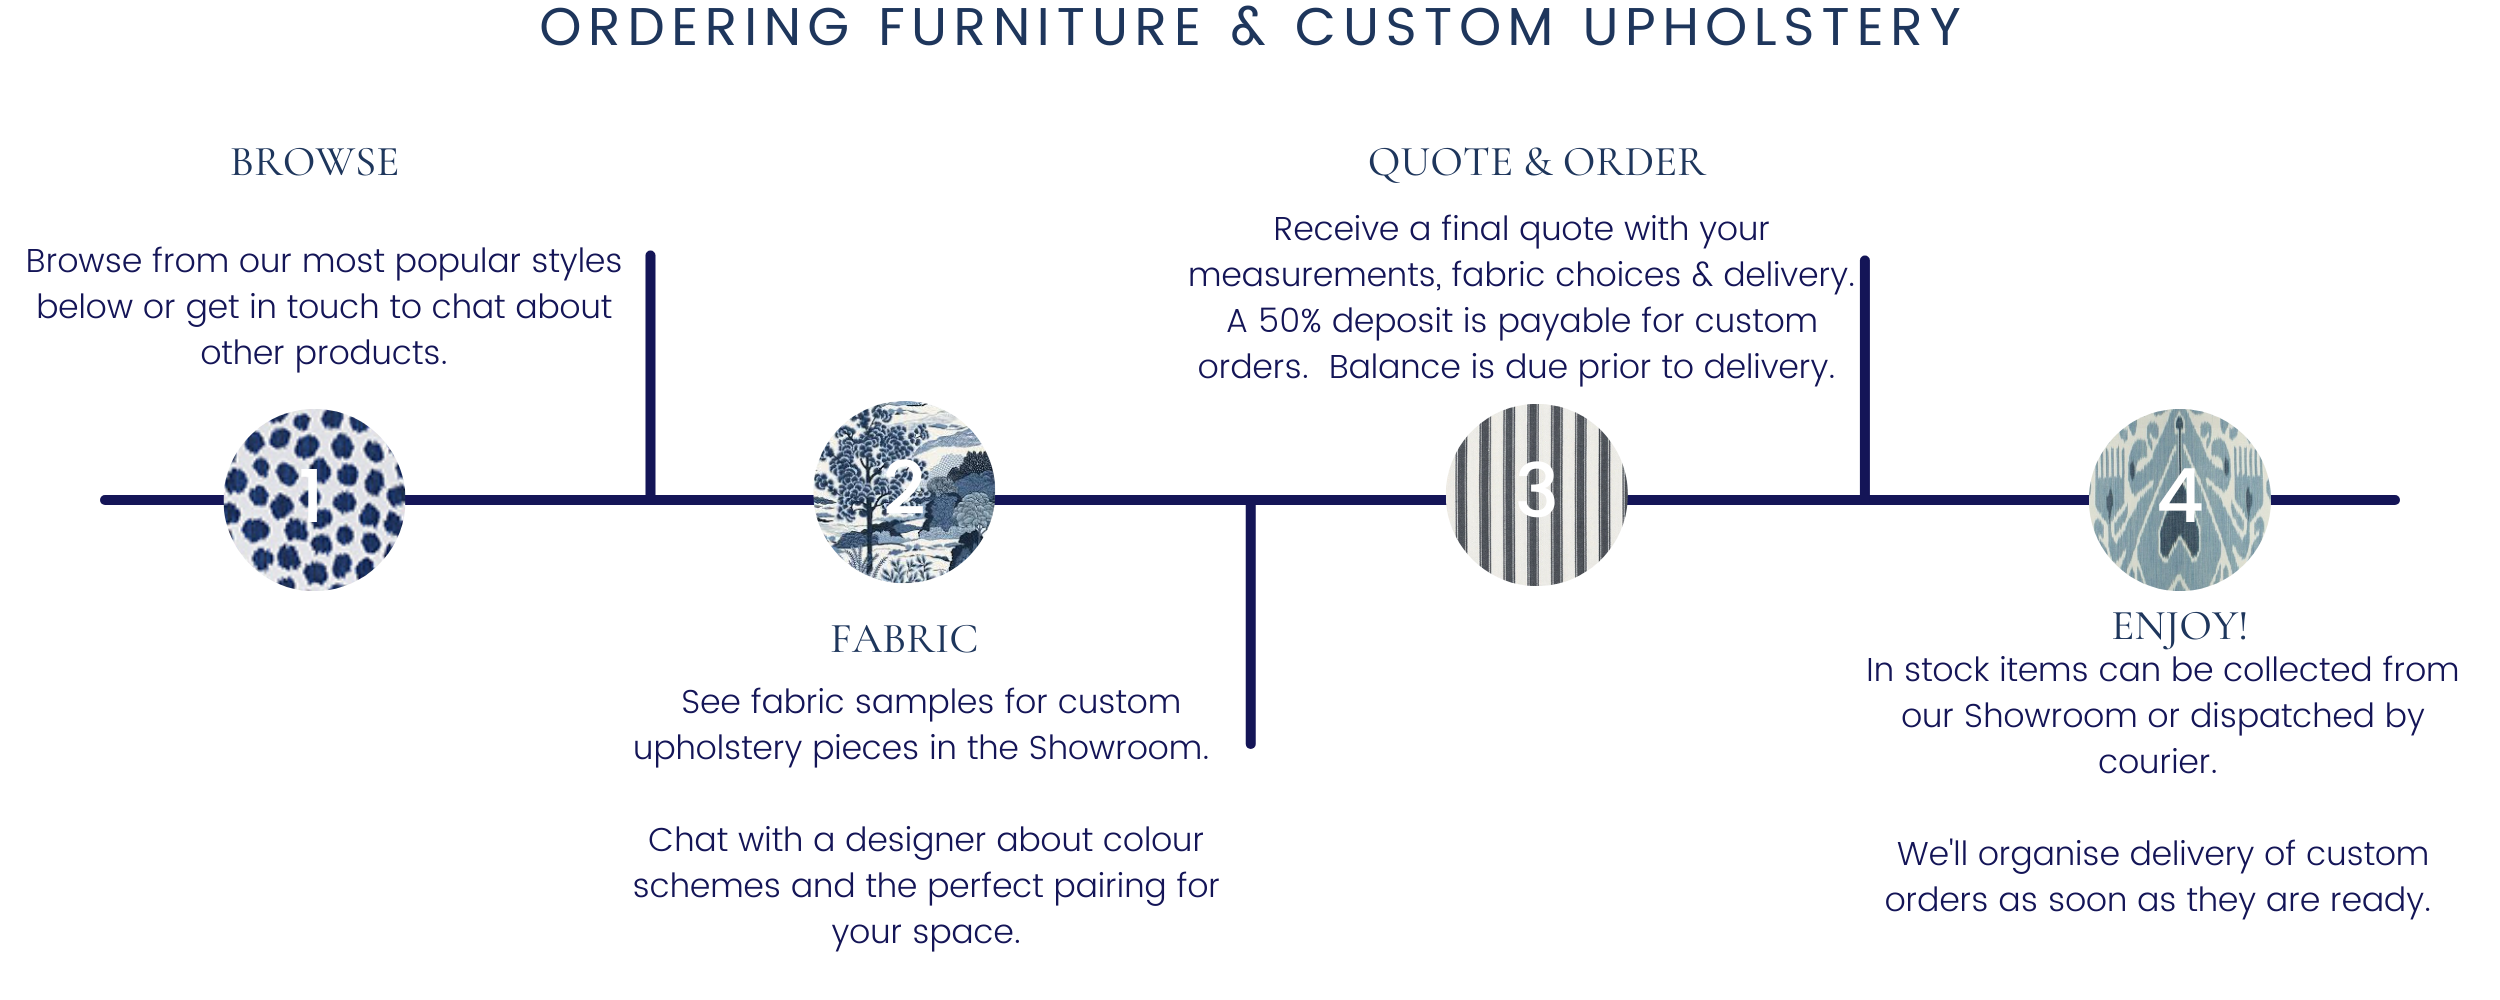 Furniture & Custom Upholstery